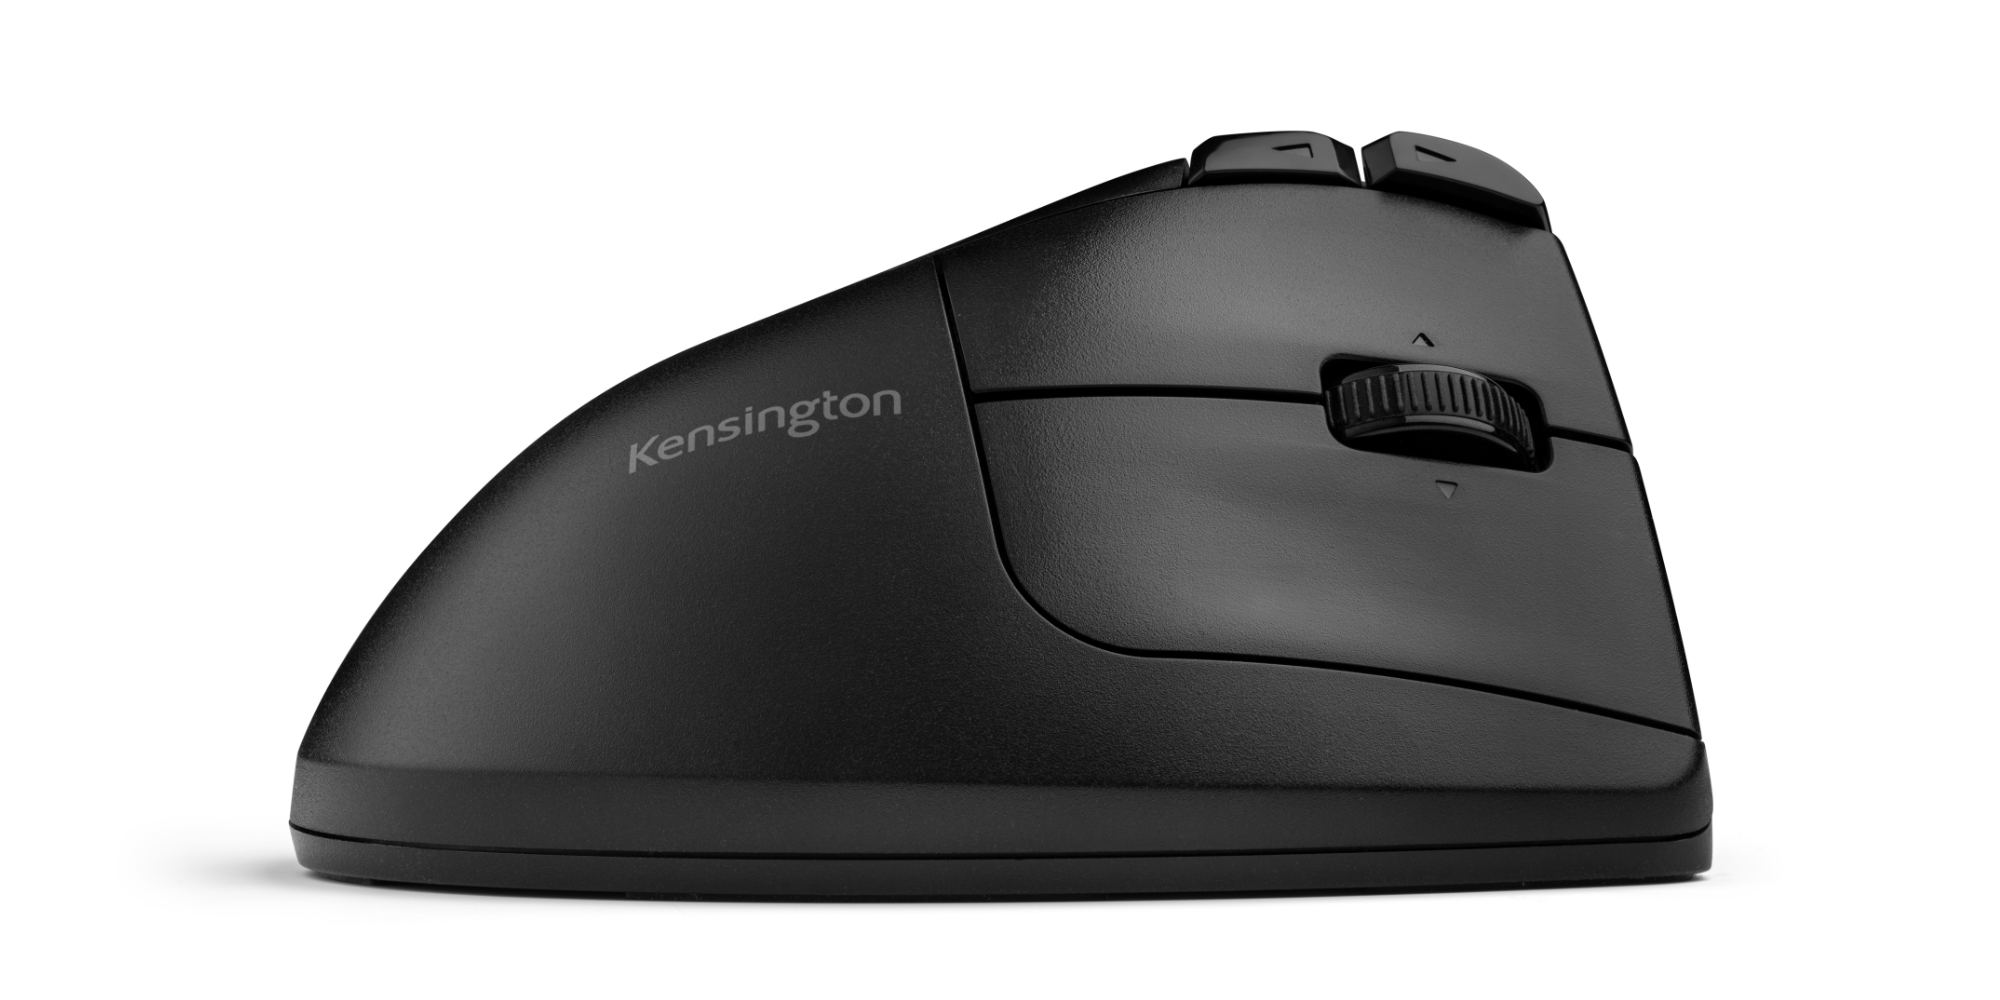 kensington mouse driver k72400